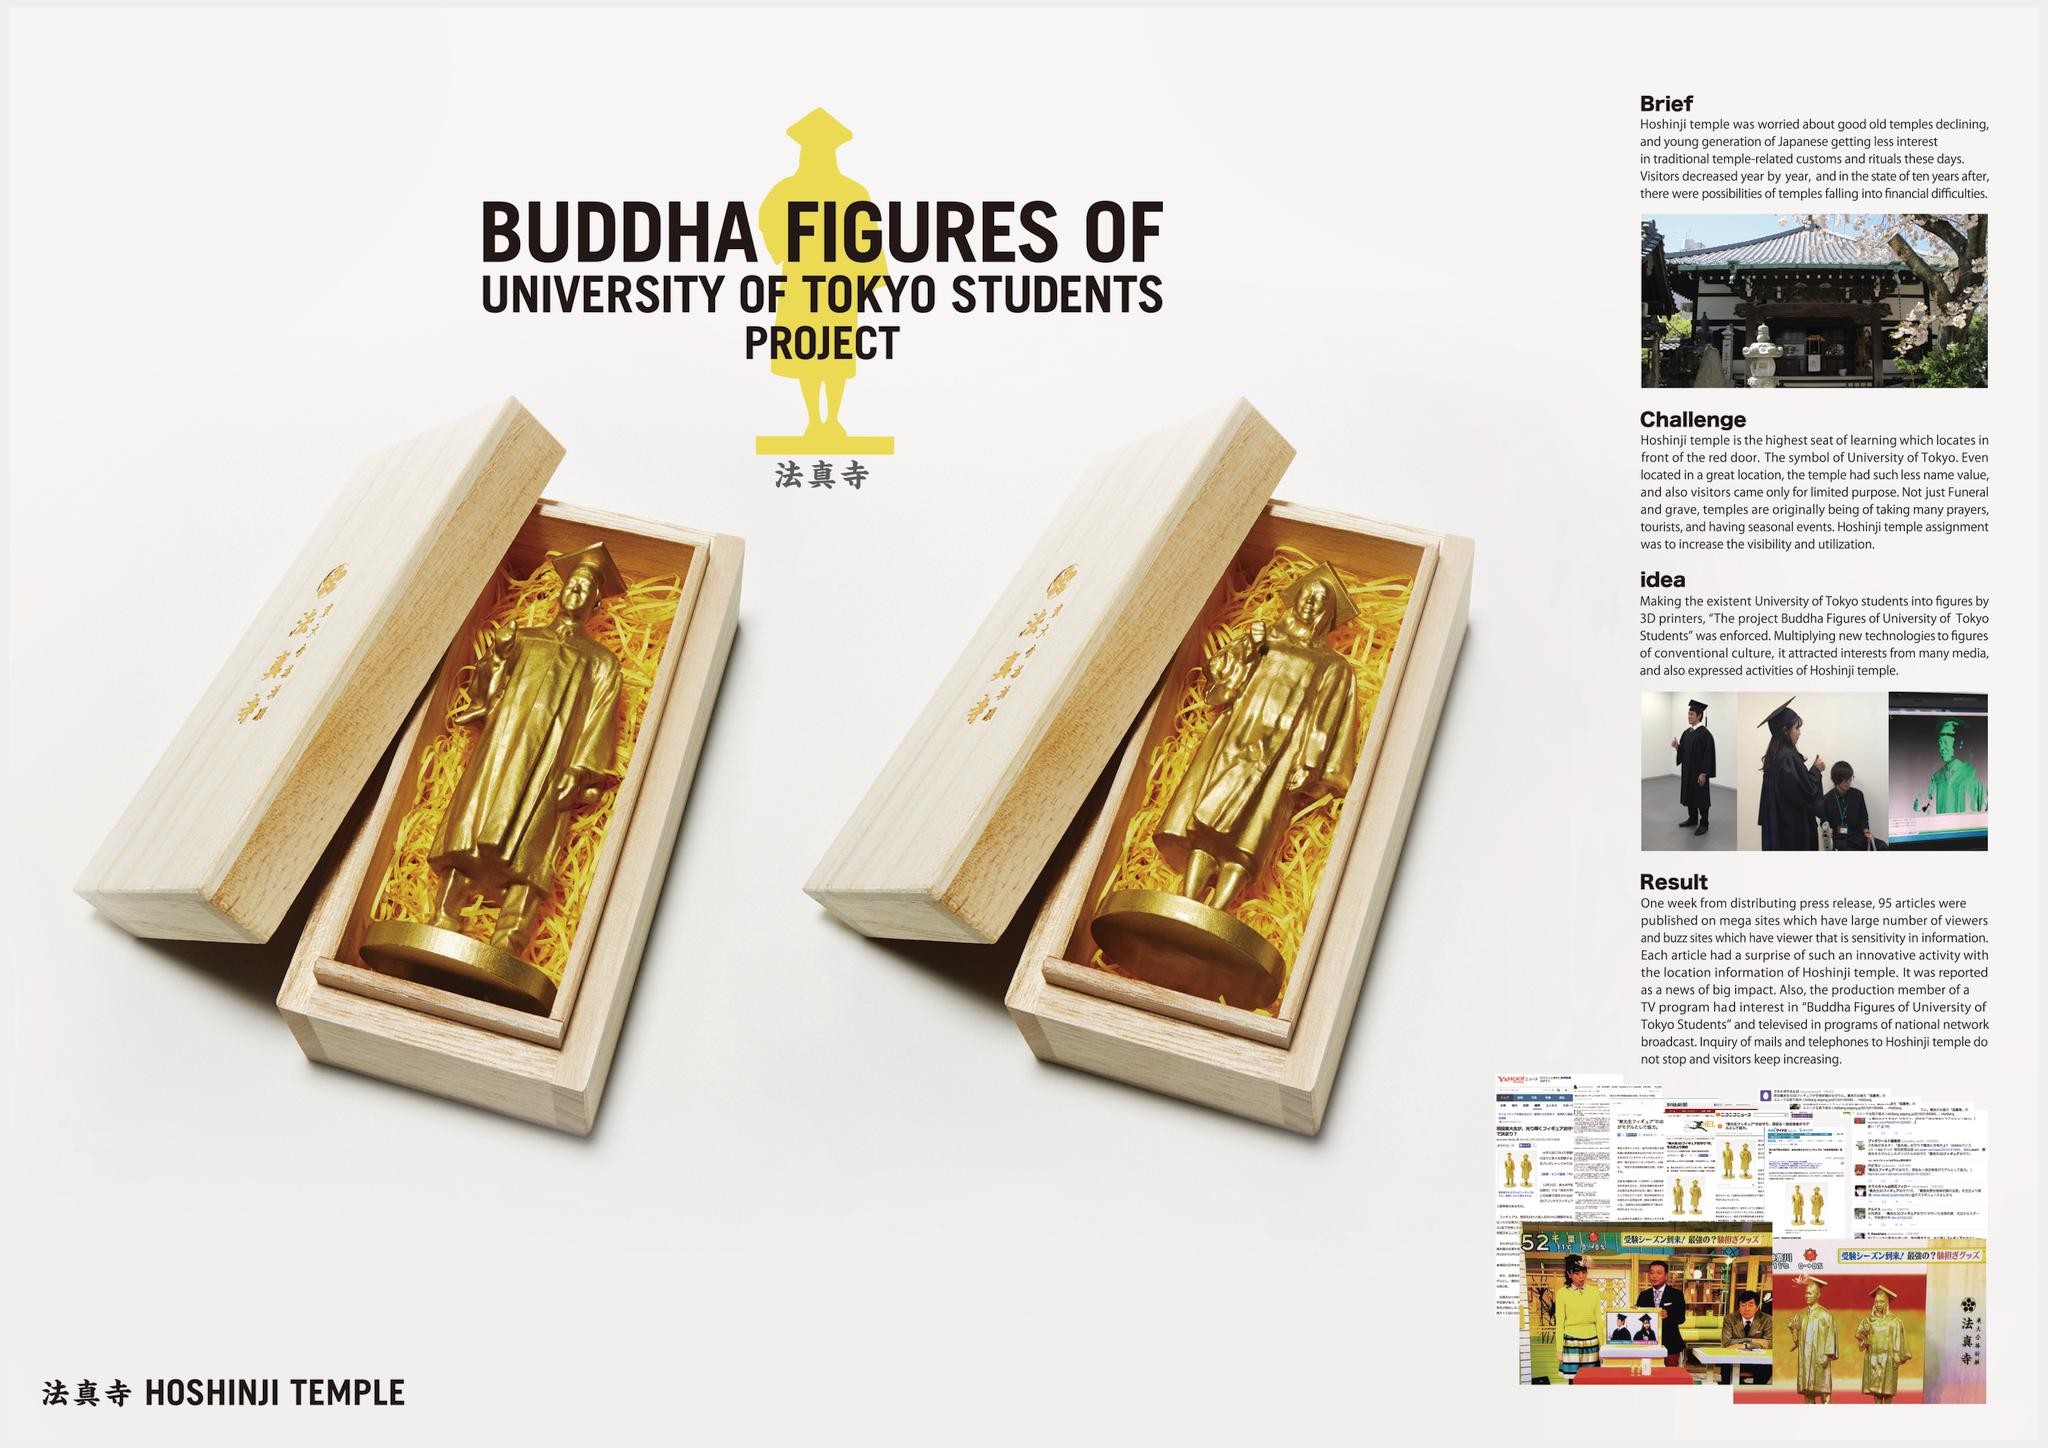 BUDDHA FIGURES OF UNIVERSITY OF TOKYO STUDENTS PROJECT